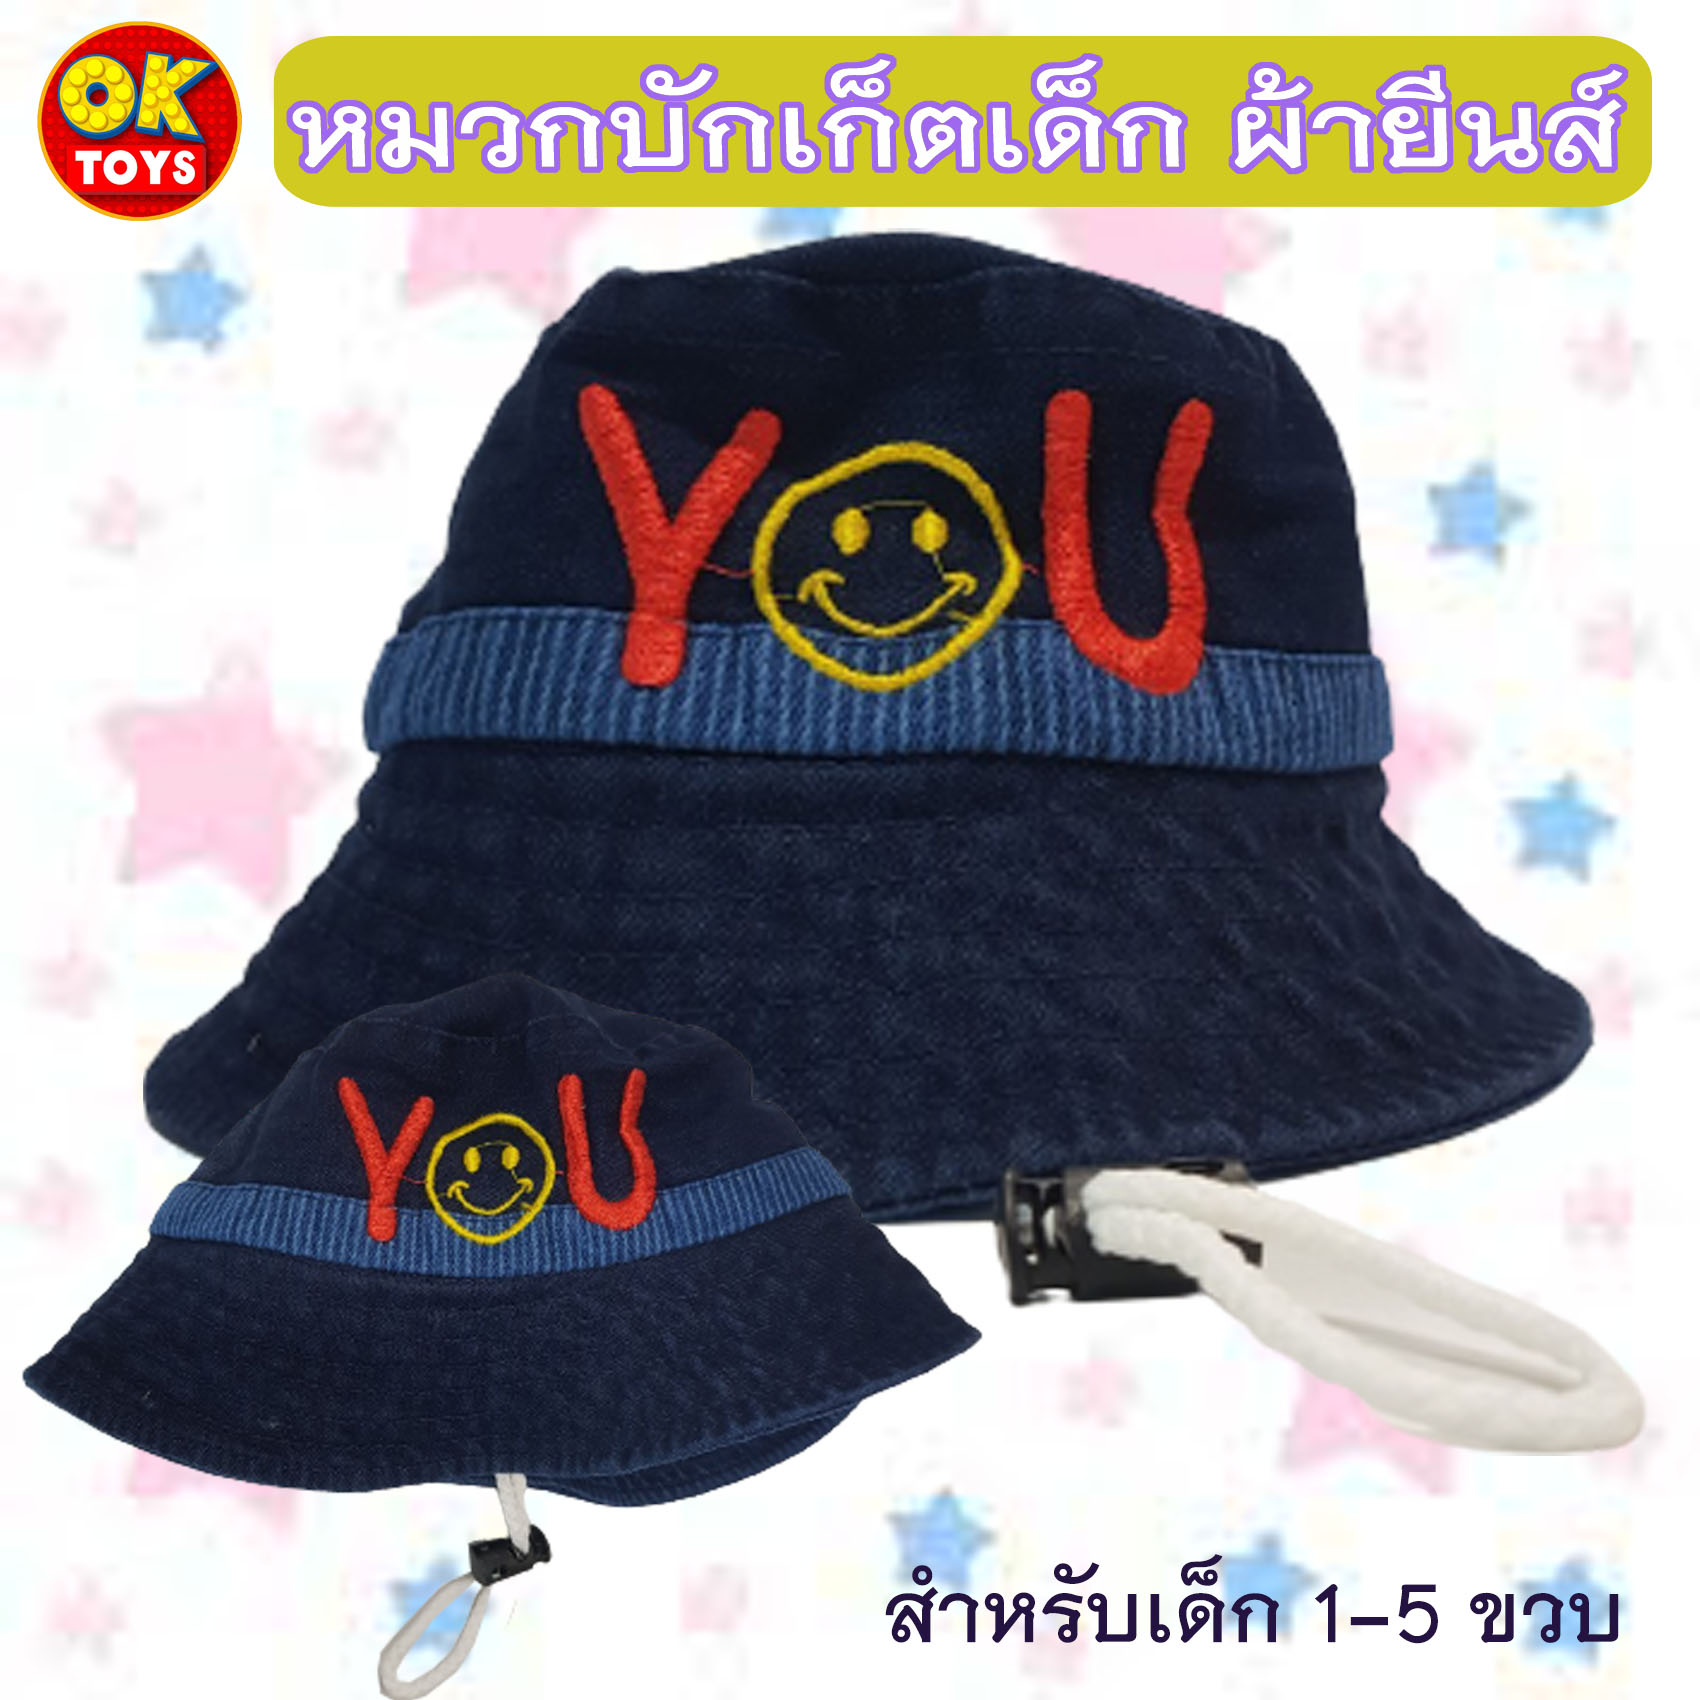 AM0036 หมวกบักเก็ตเด็ก ผ้ายีนส์ มีลายปักน่ารัก พร้อมสายรัดคางกันหลุด เหมาะสำหรับเด็ก 1-5 ขวบ